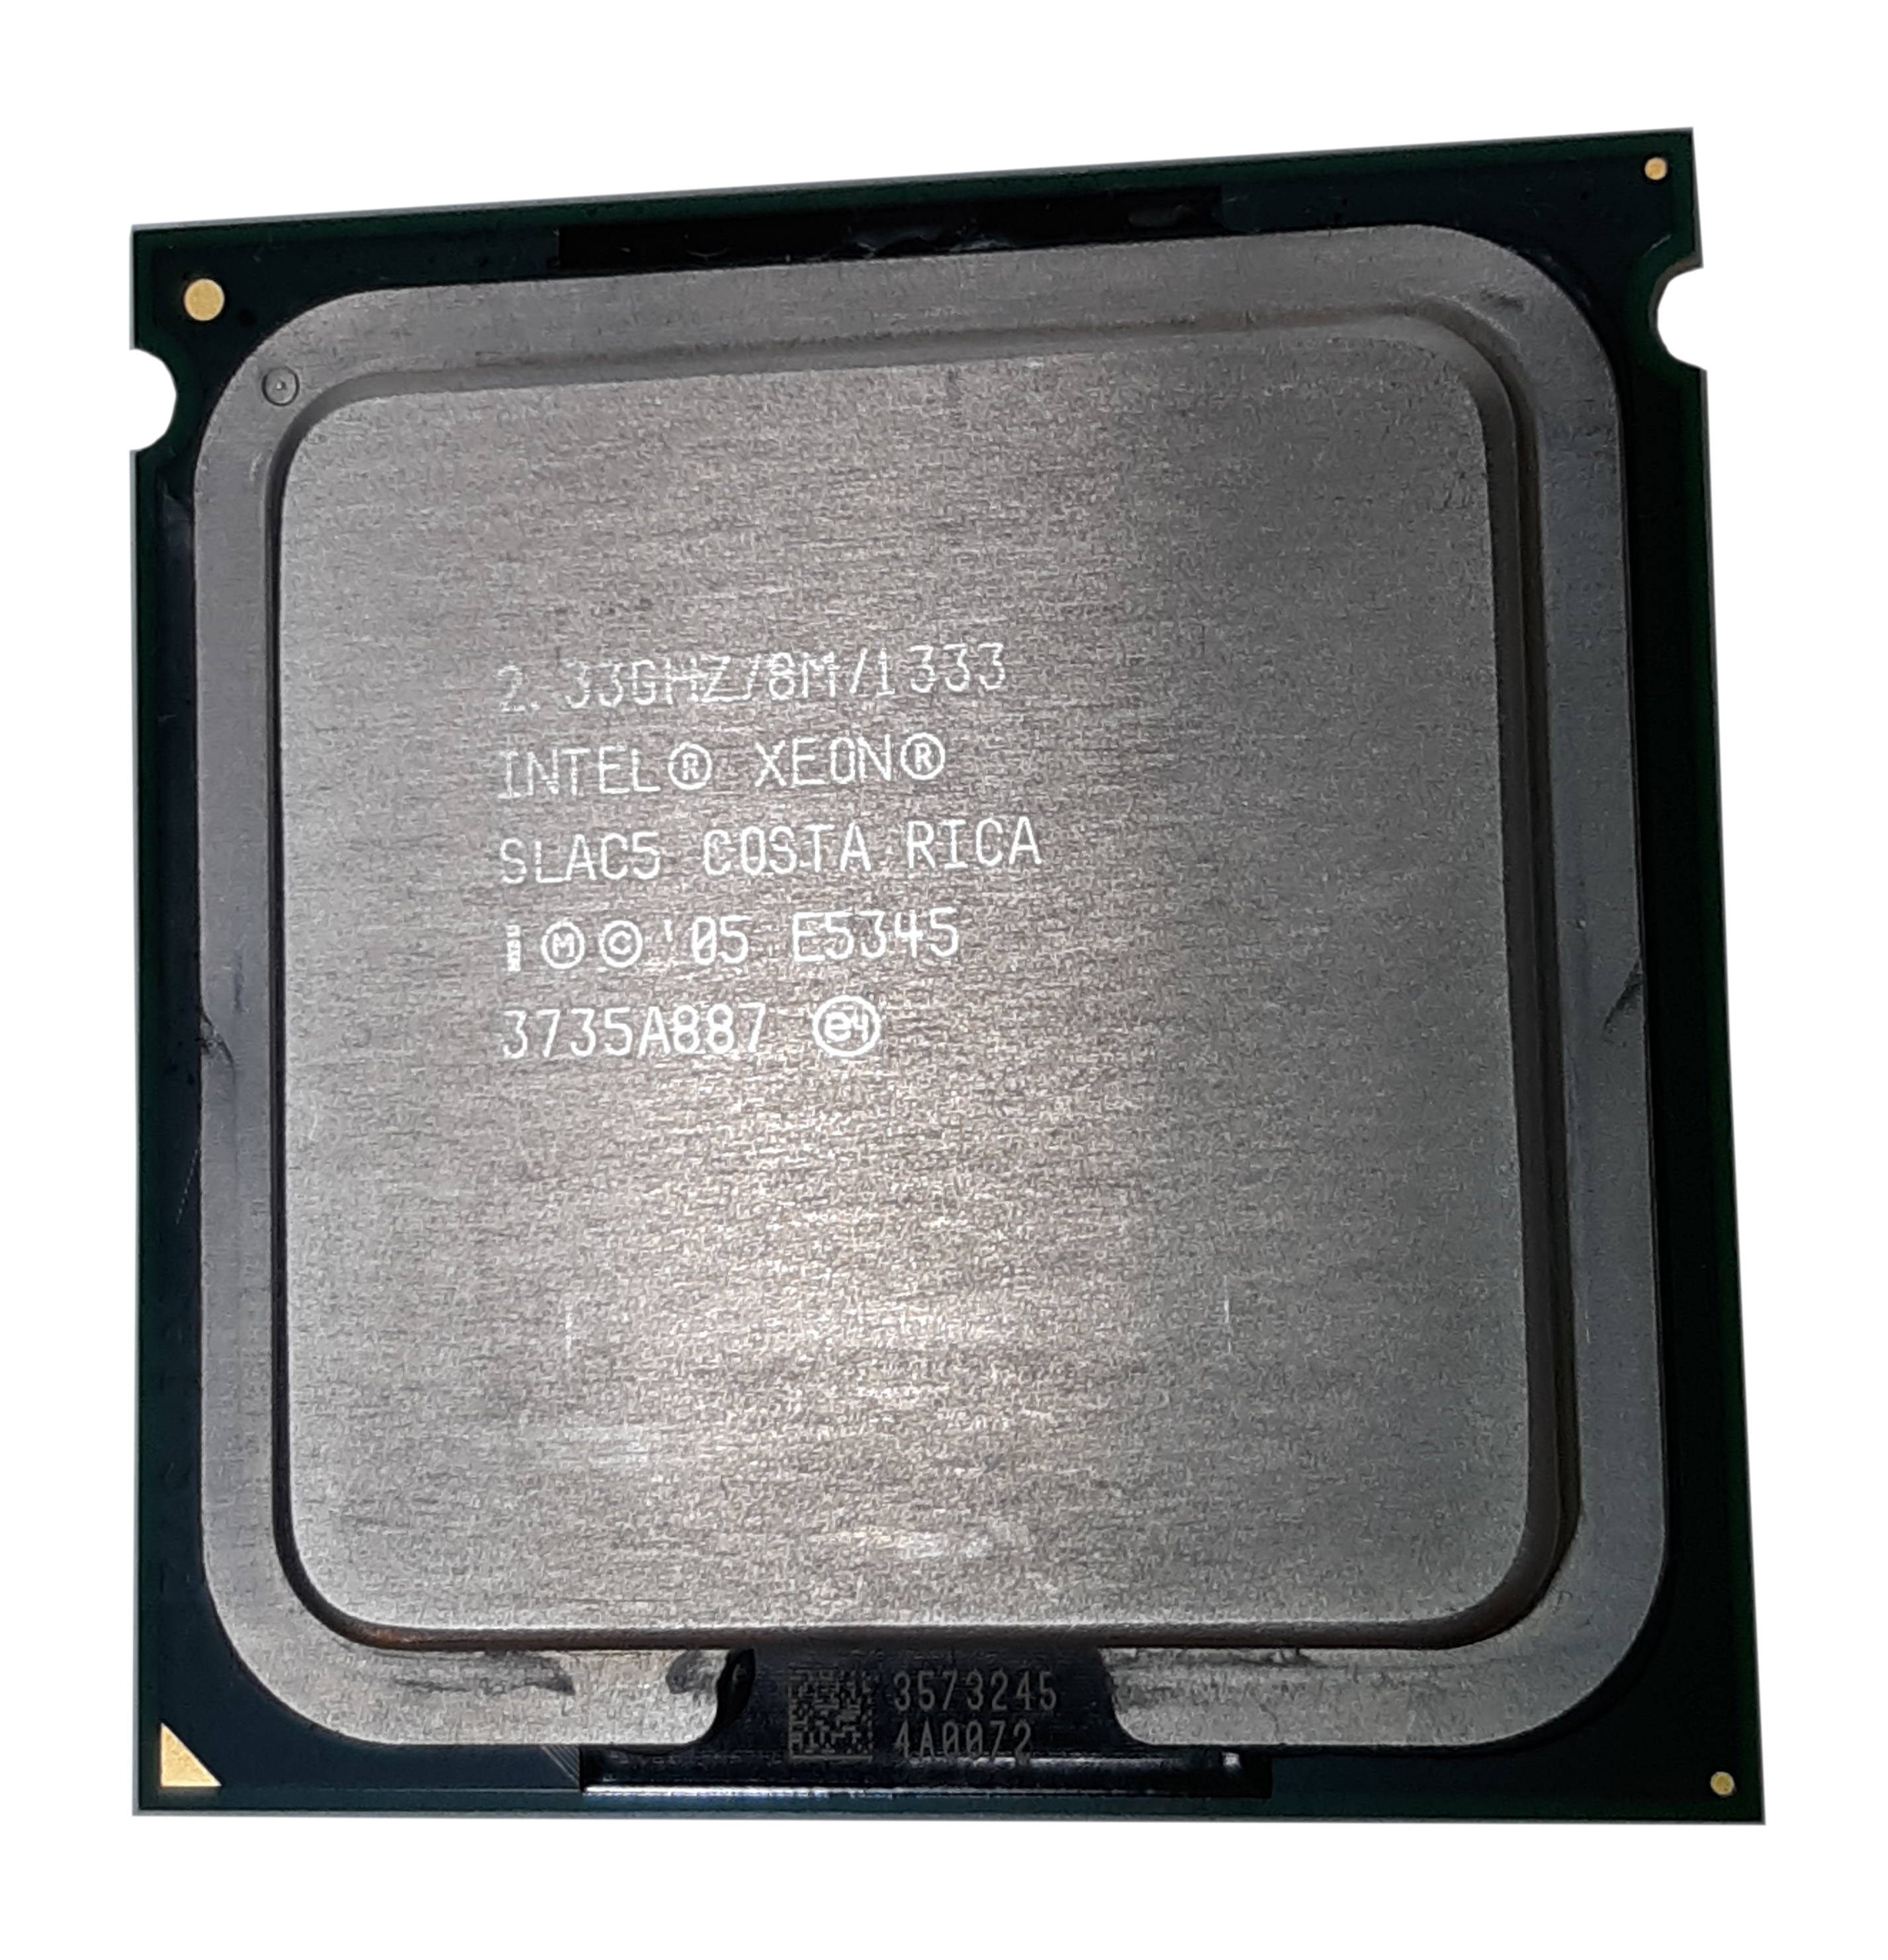 Intel Xeon Processor CPU E5345 2.33GHz Quad Core 8MB 1333 LGA771 SLAC5